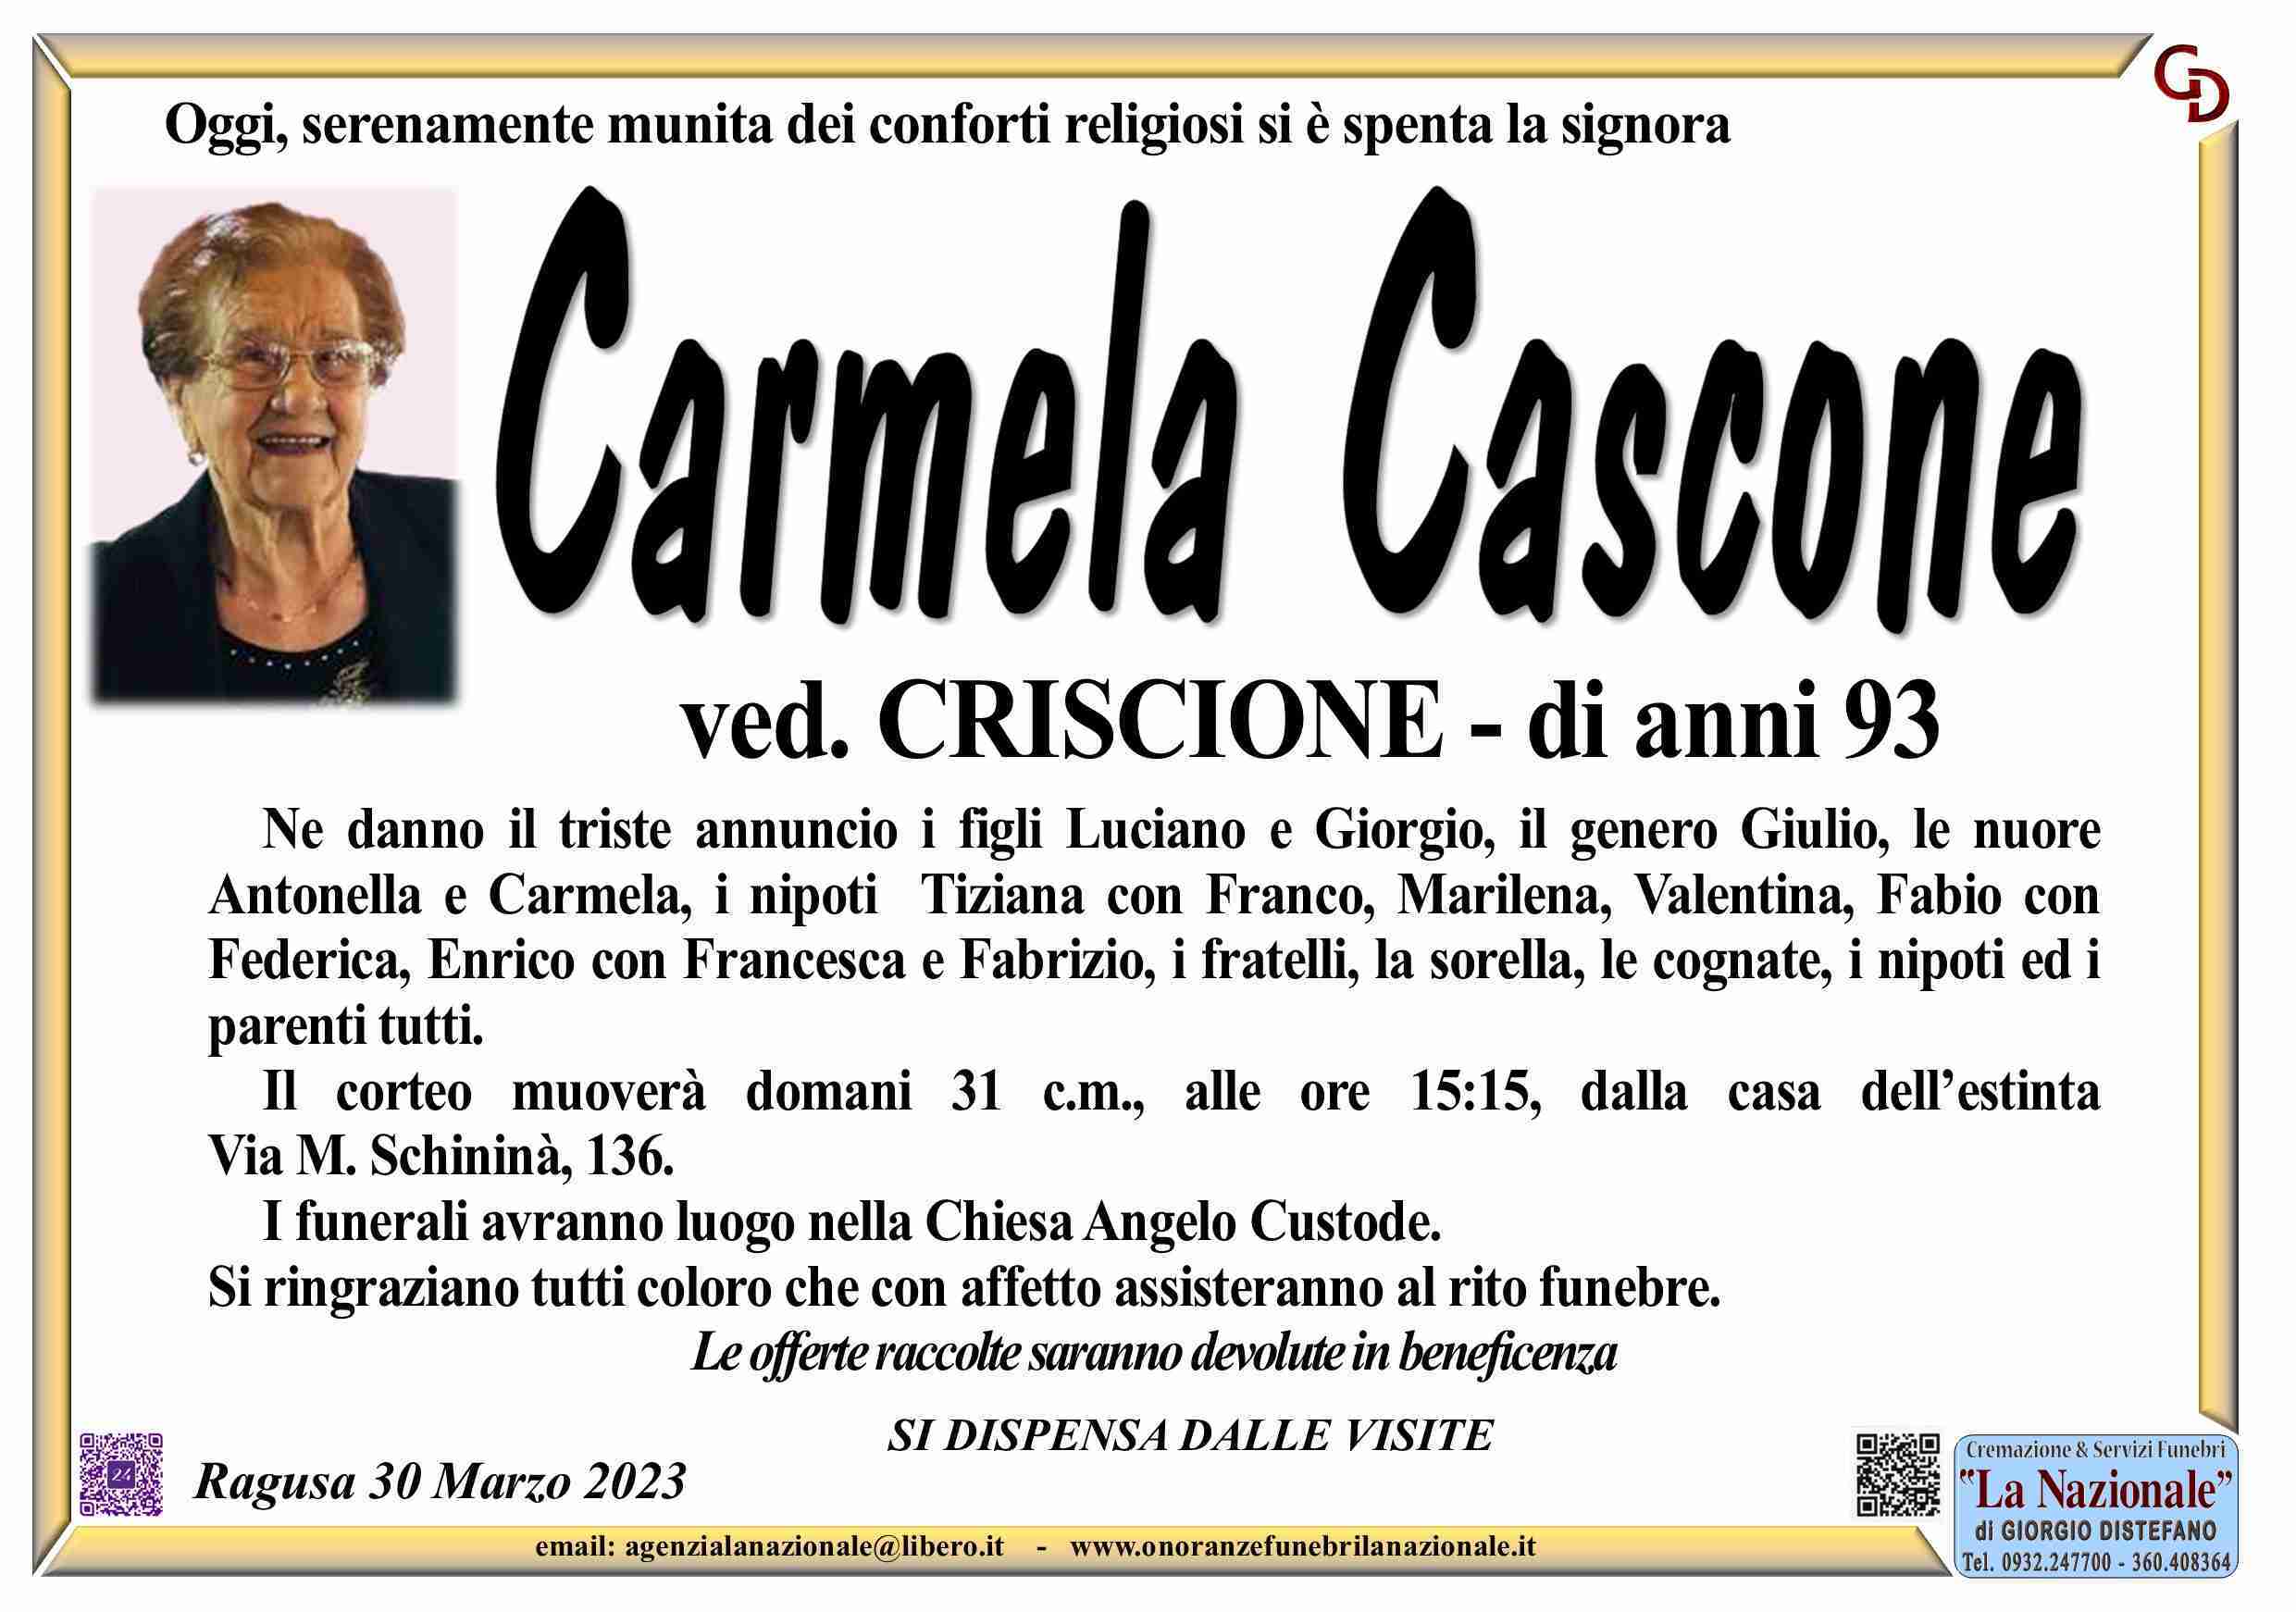 Carmela Cascone